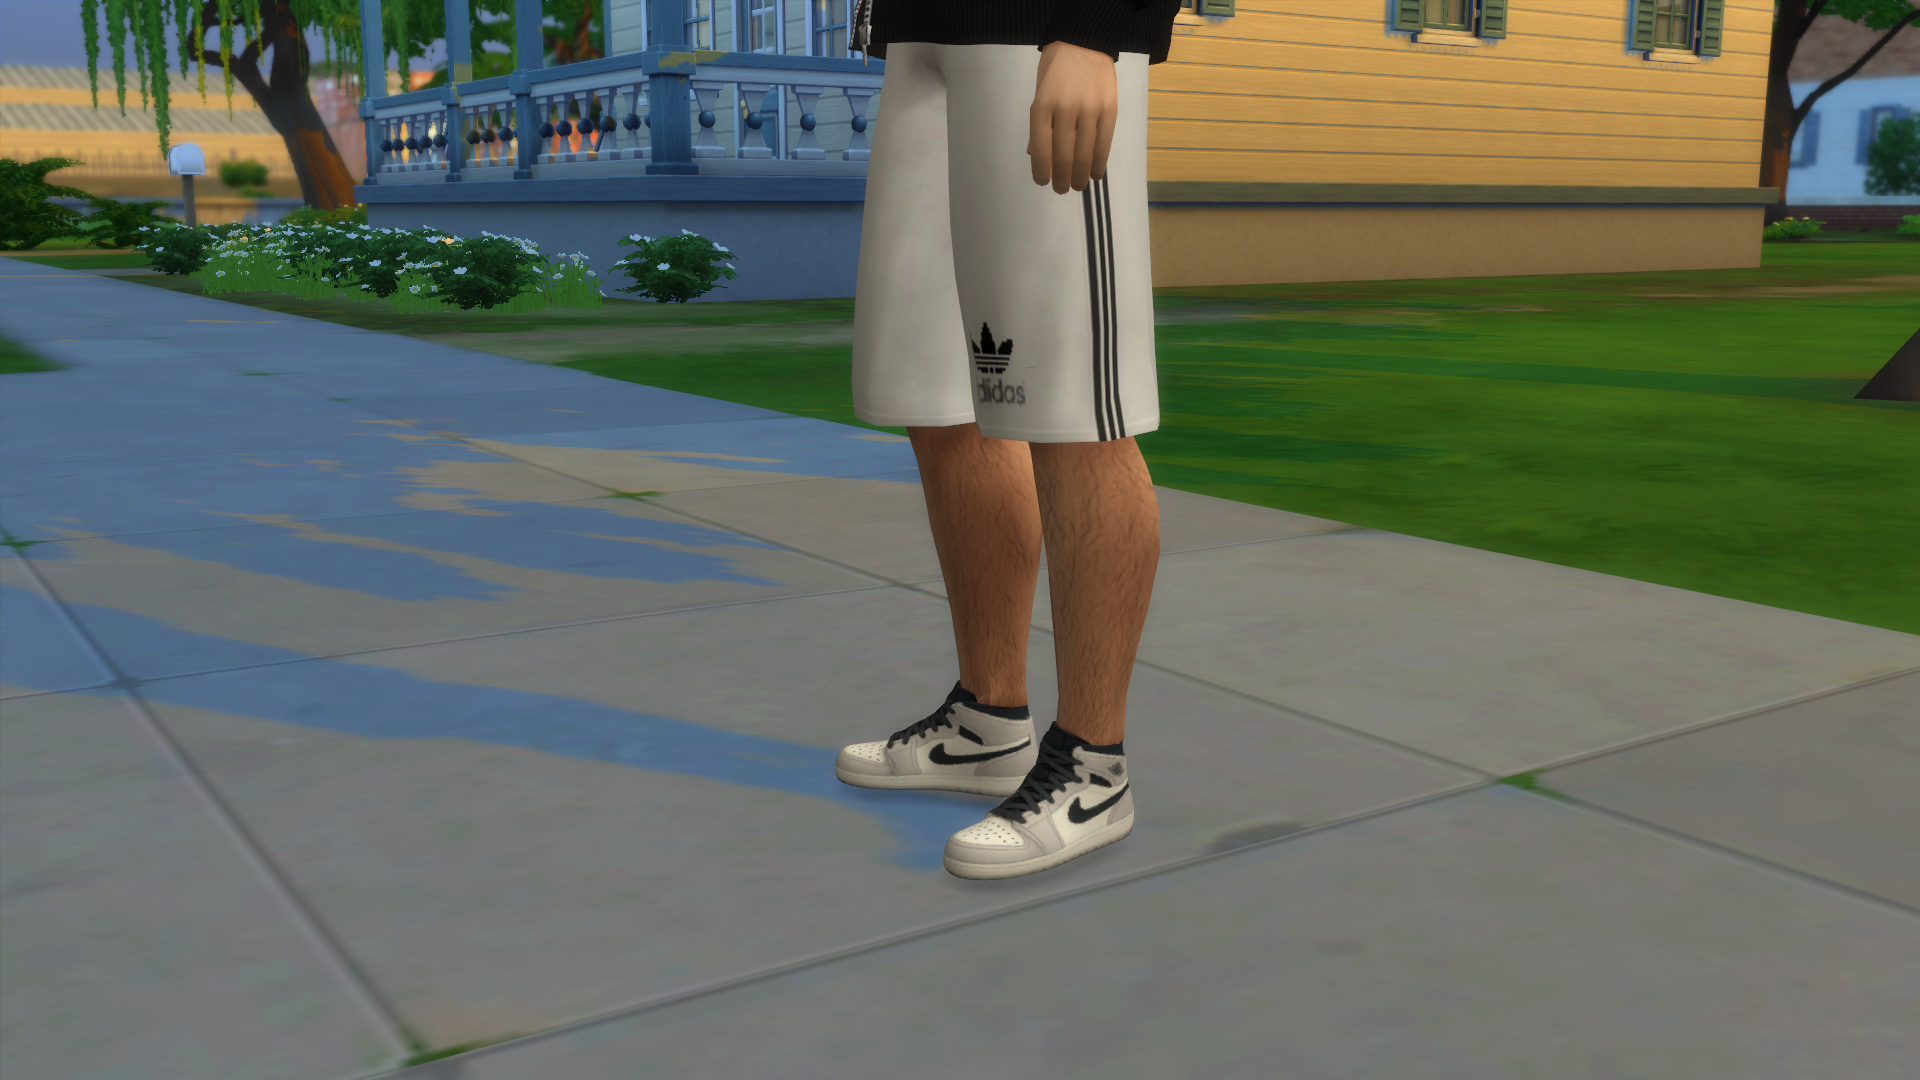 erts revolutie Ik heb een Engelse les Mod The Sims - Nike air Jordan sneakers, 3 colors